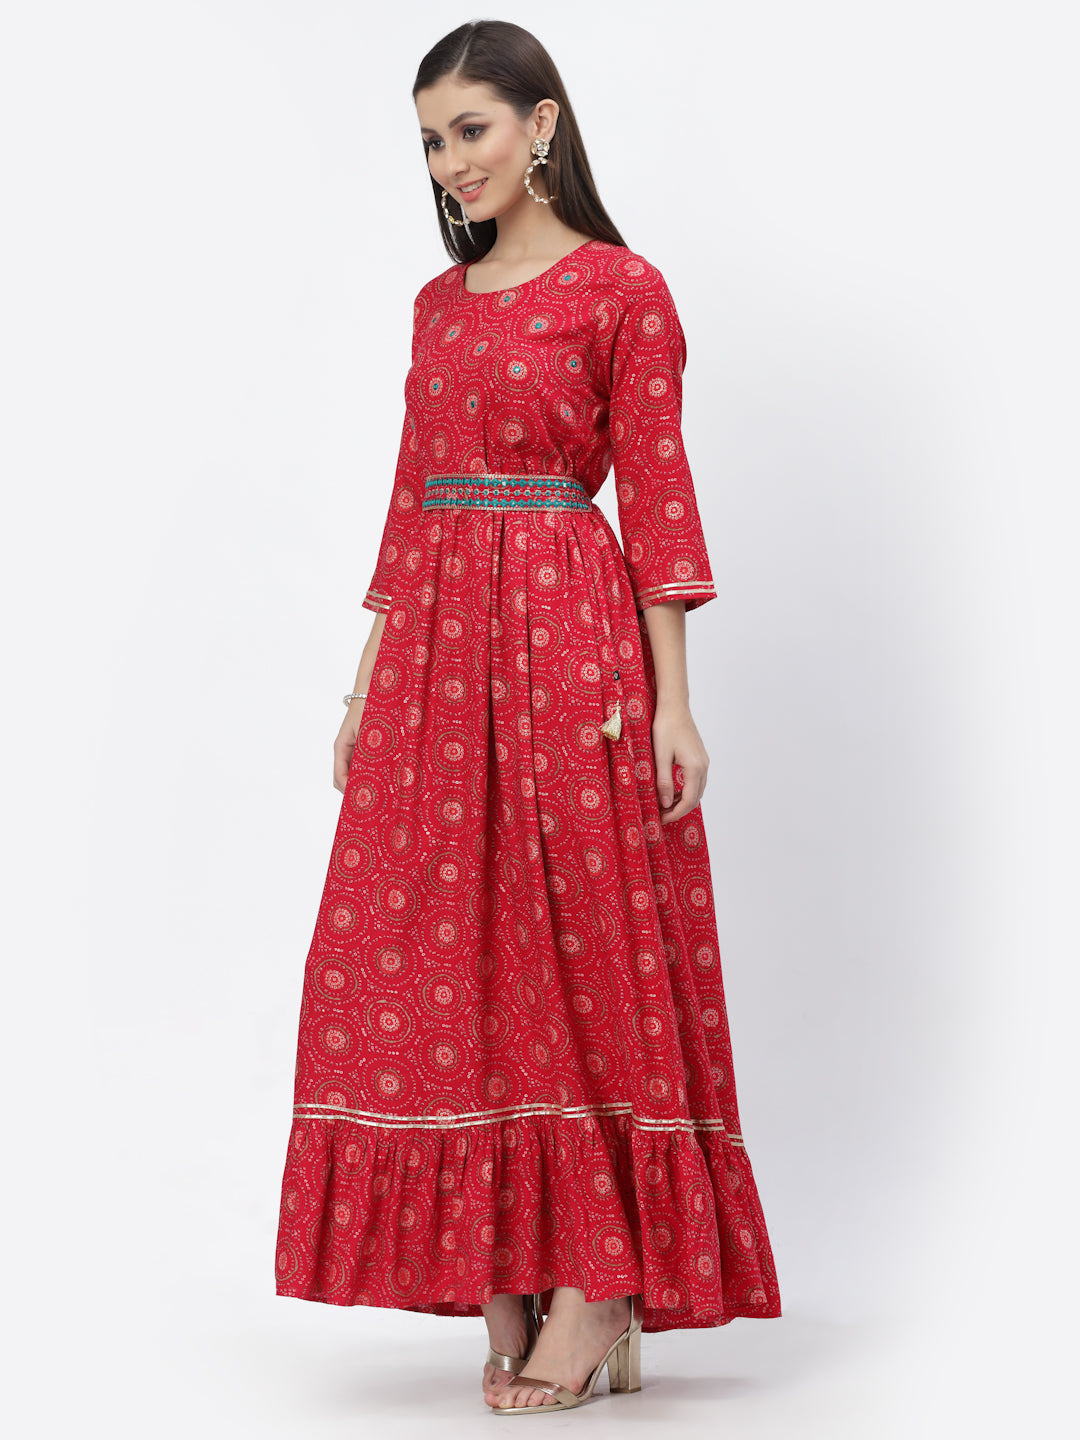 Bandhani Printed Ruffled Dress With Tie Up Belt - ARH1465R